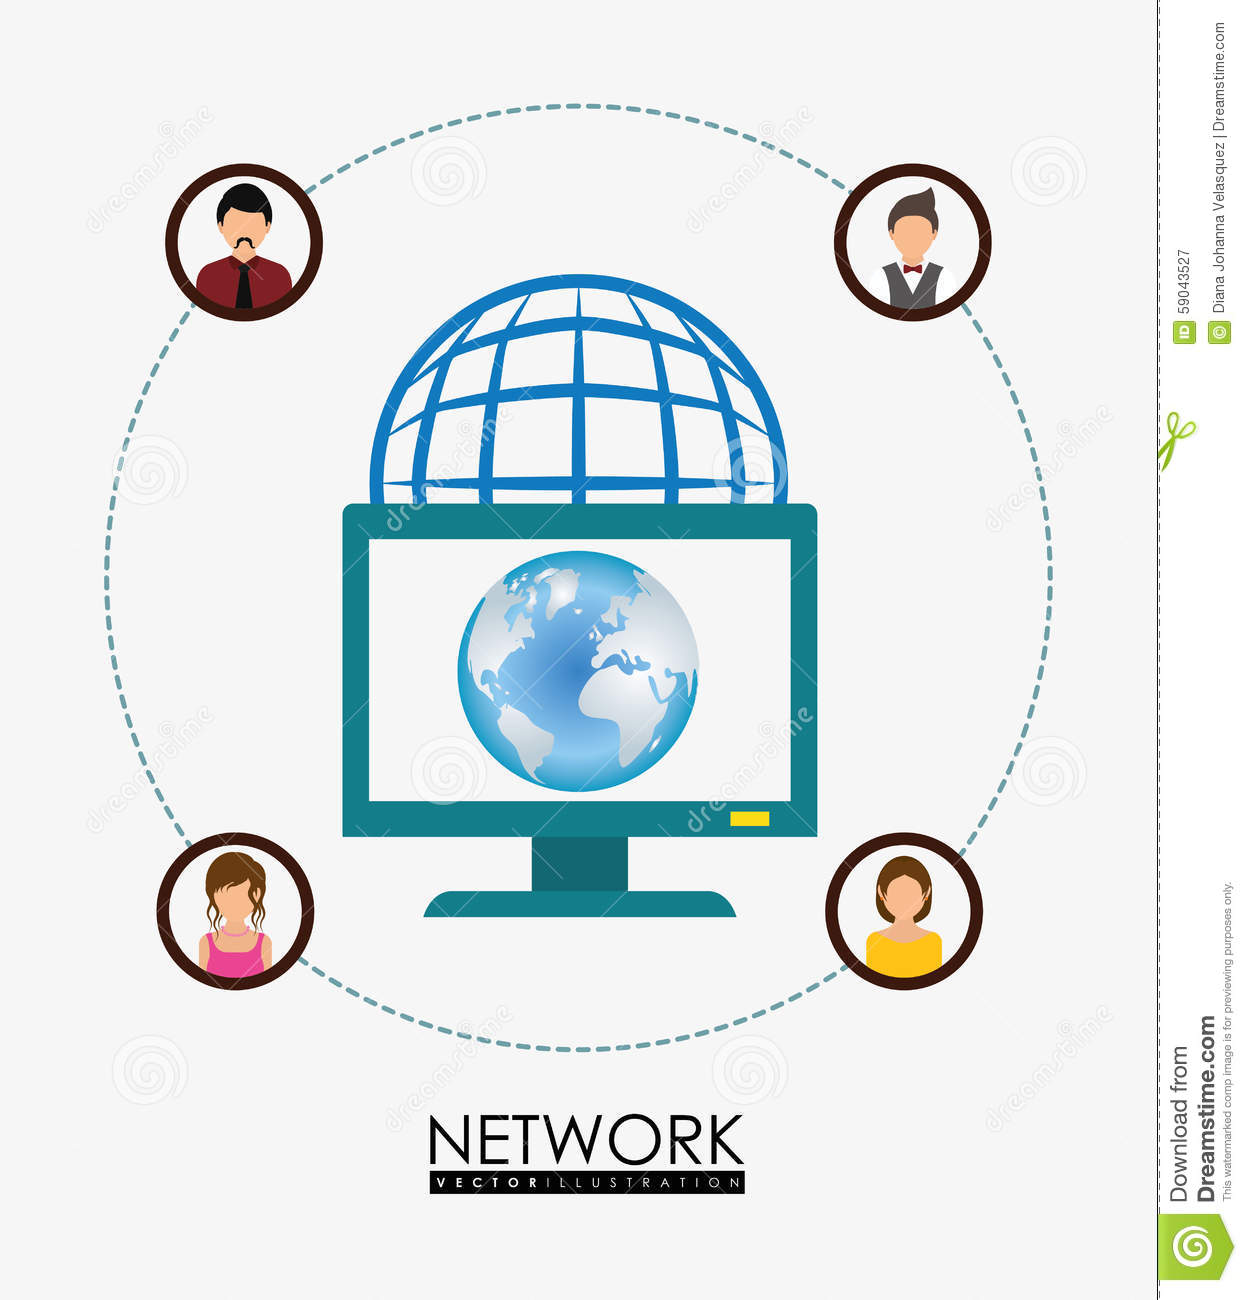 Network Vector Graphic